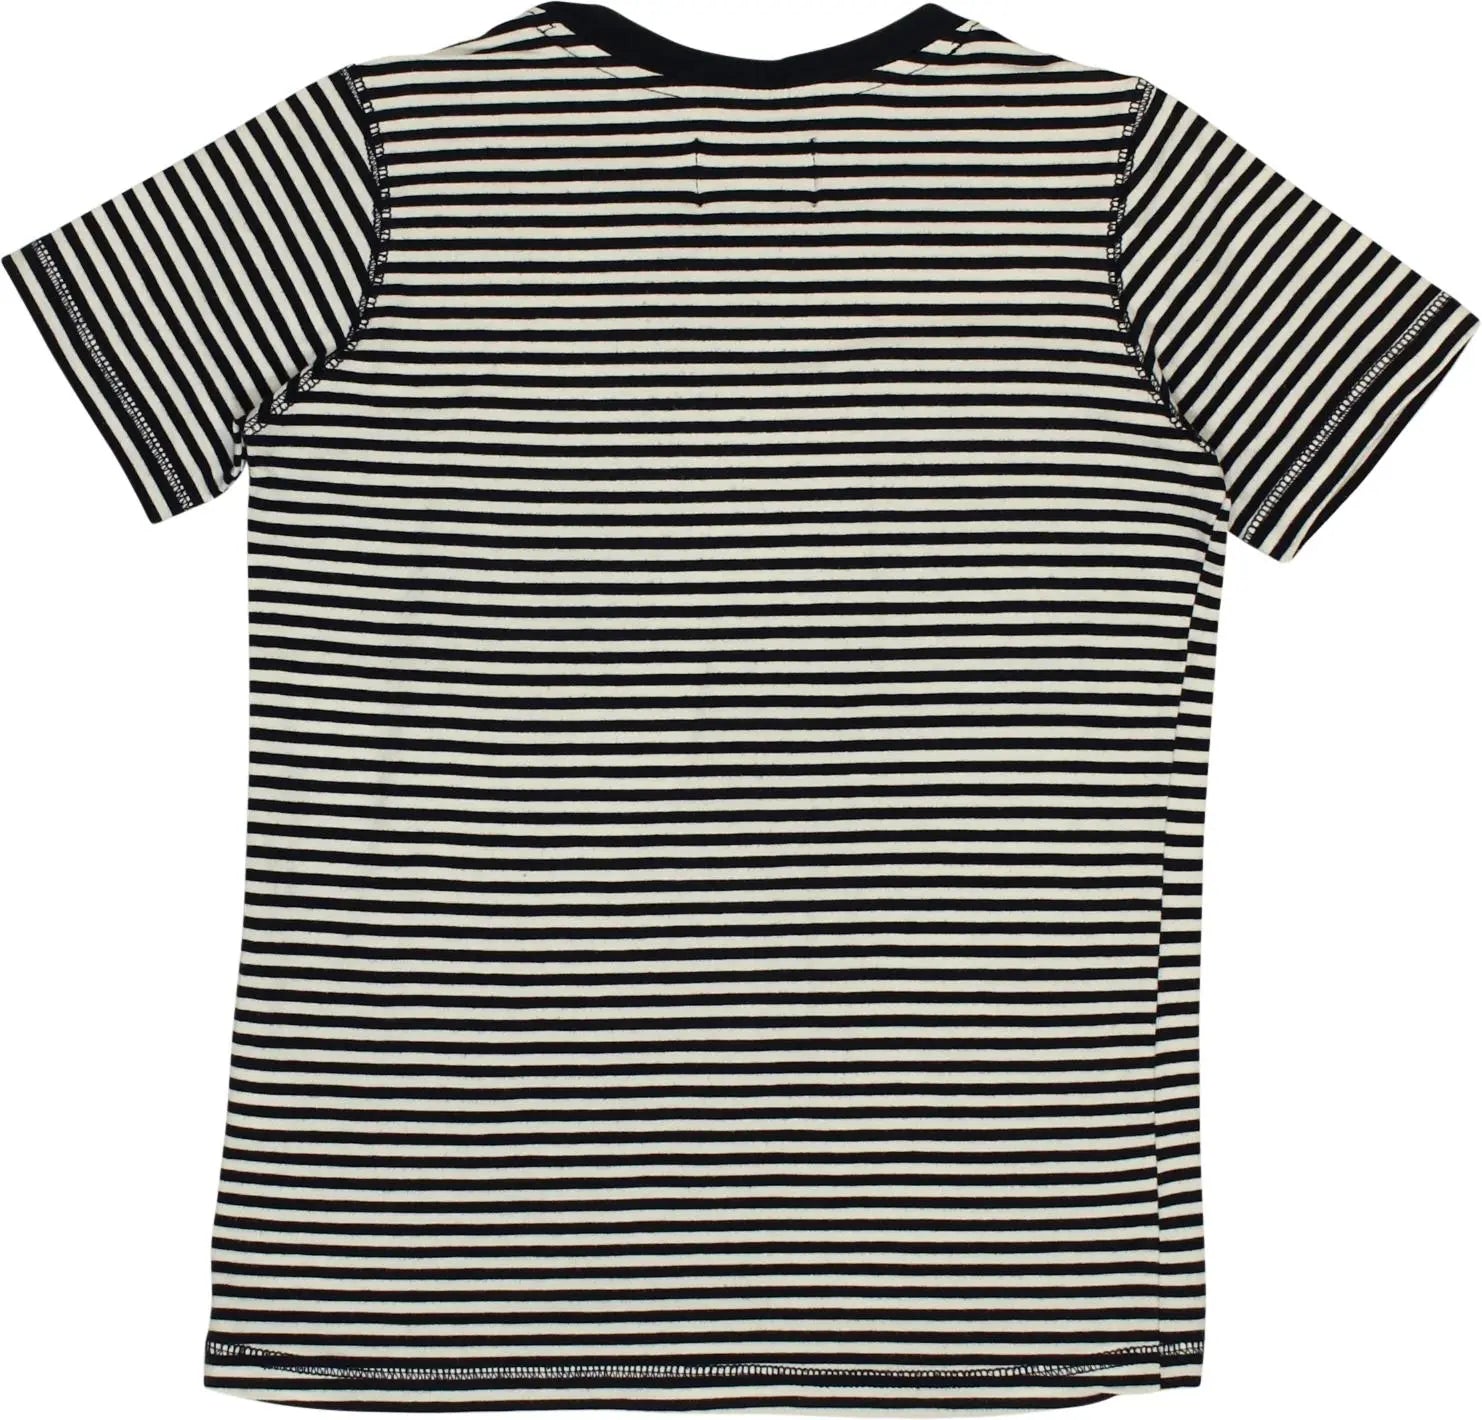 Tom-Du - Blue Striped T-shirt- ThriftTale.com - Vintage and second handclothing